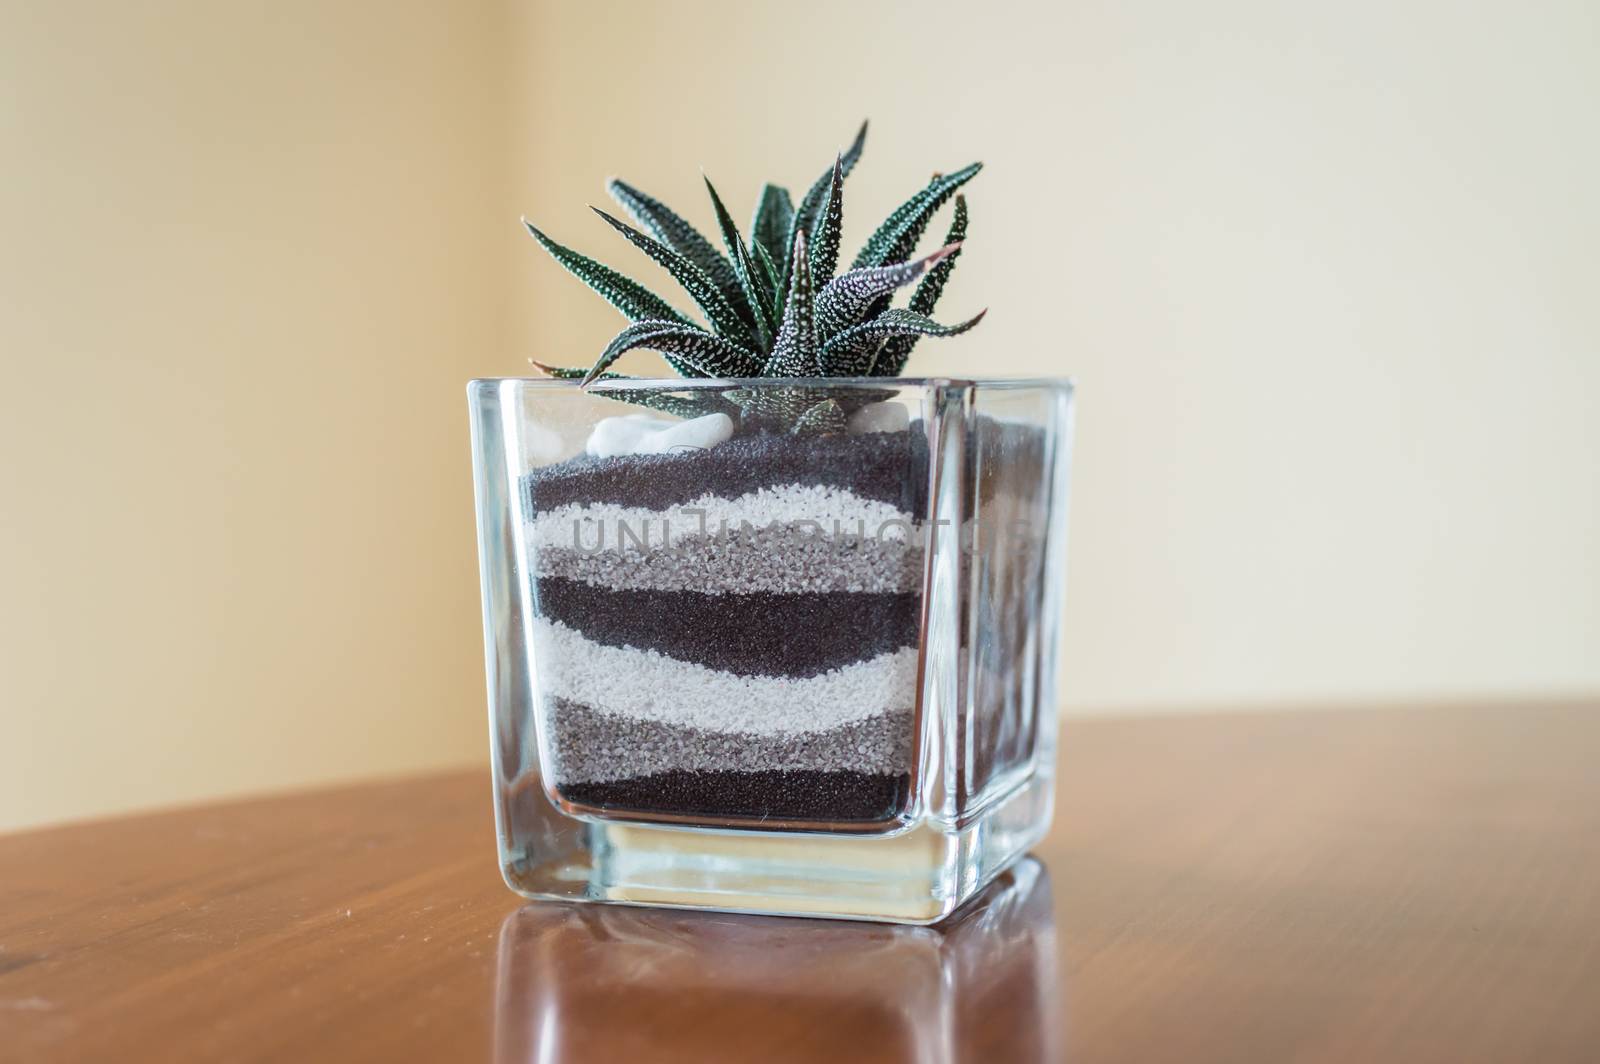 small cactus in glass pot by okskukuruza